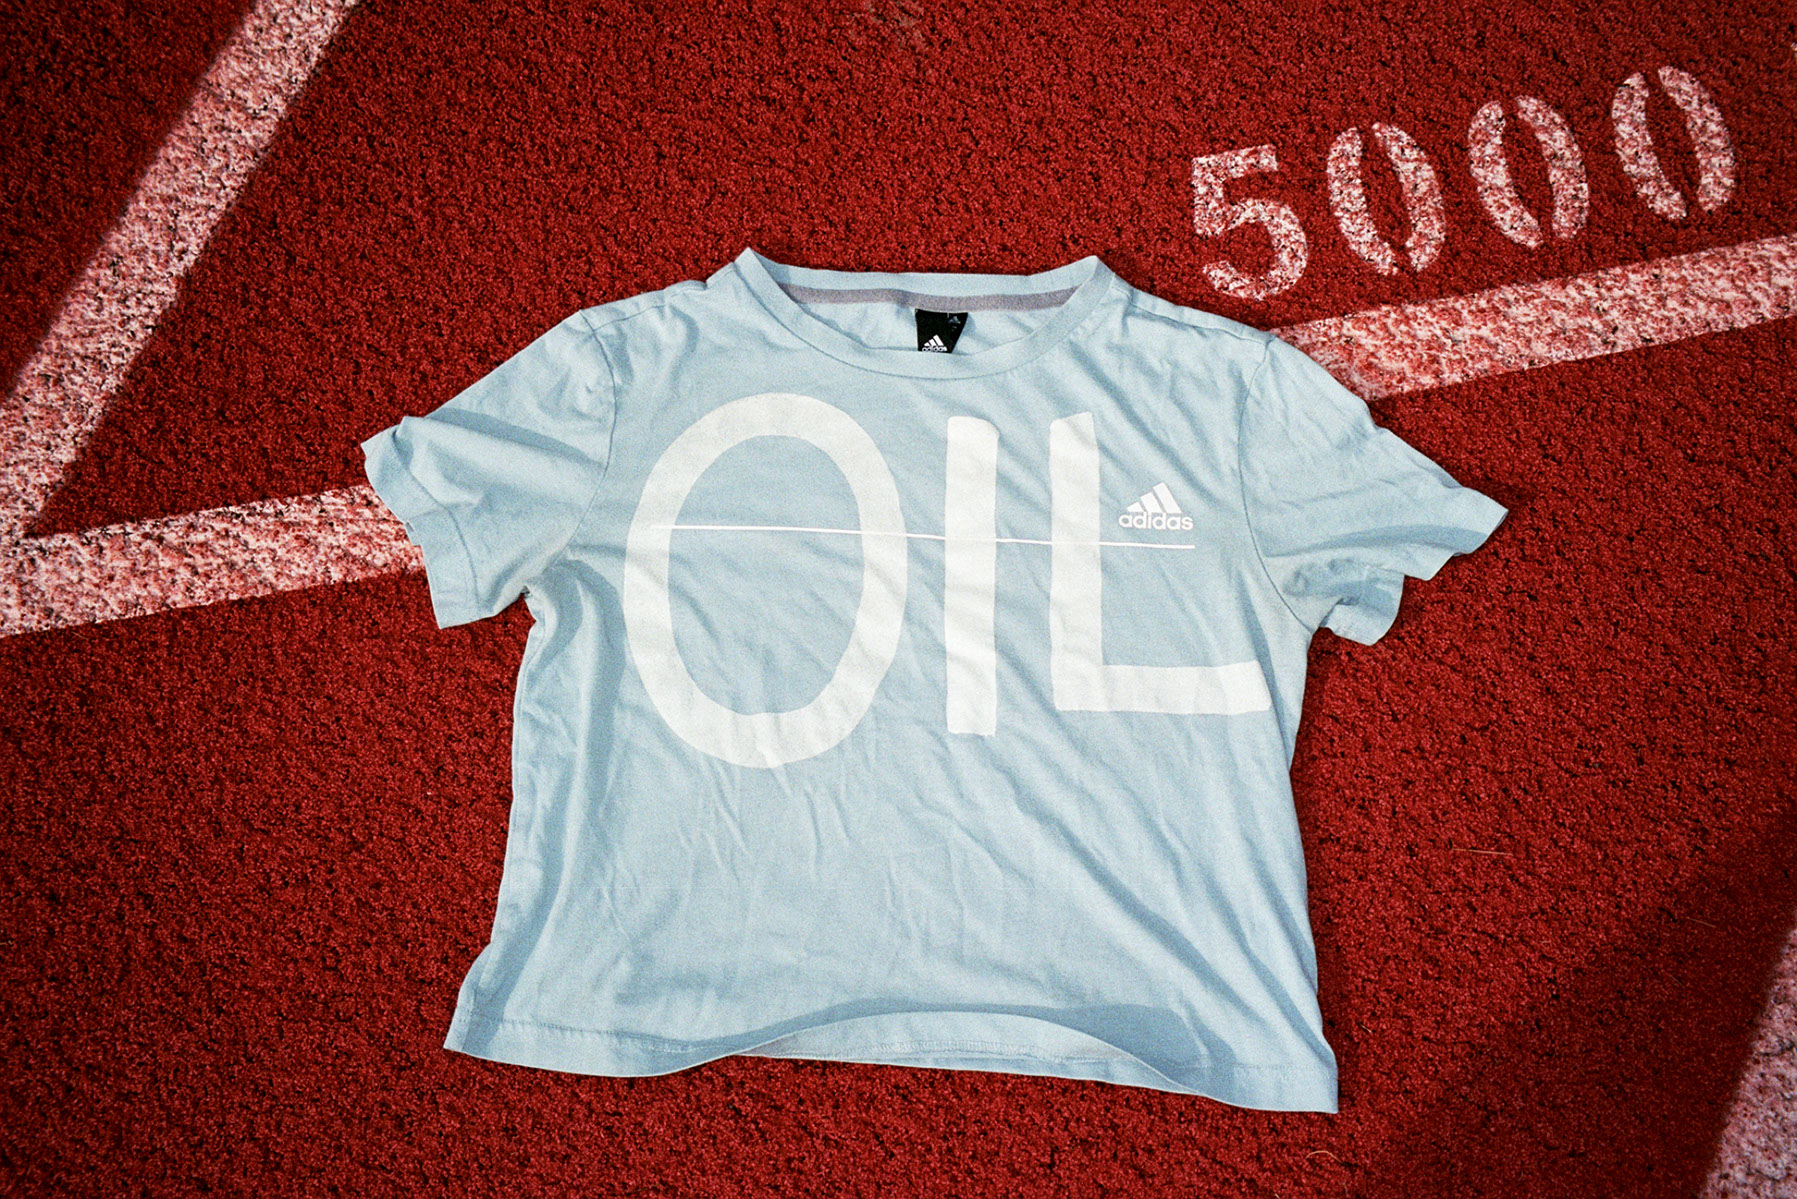 1-of-1 adidas oil shirt